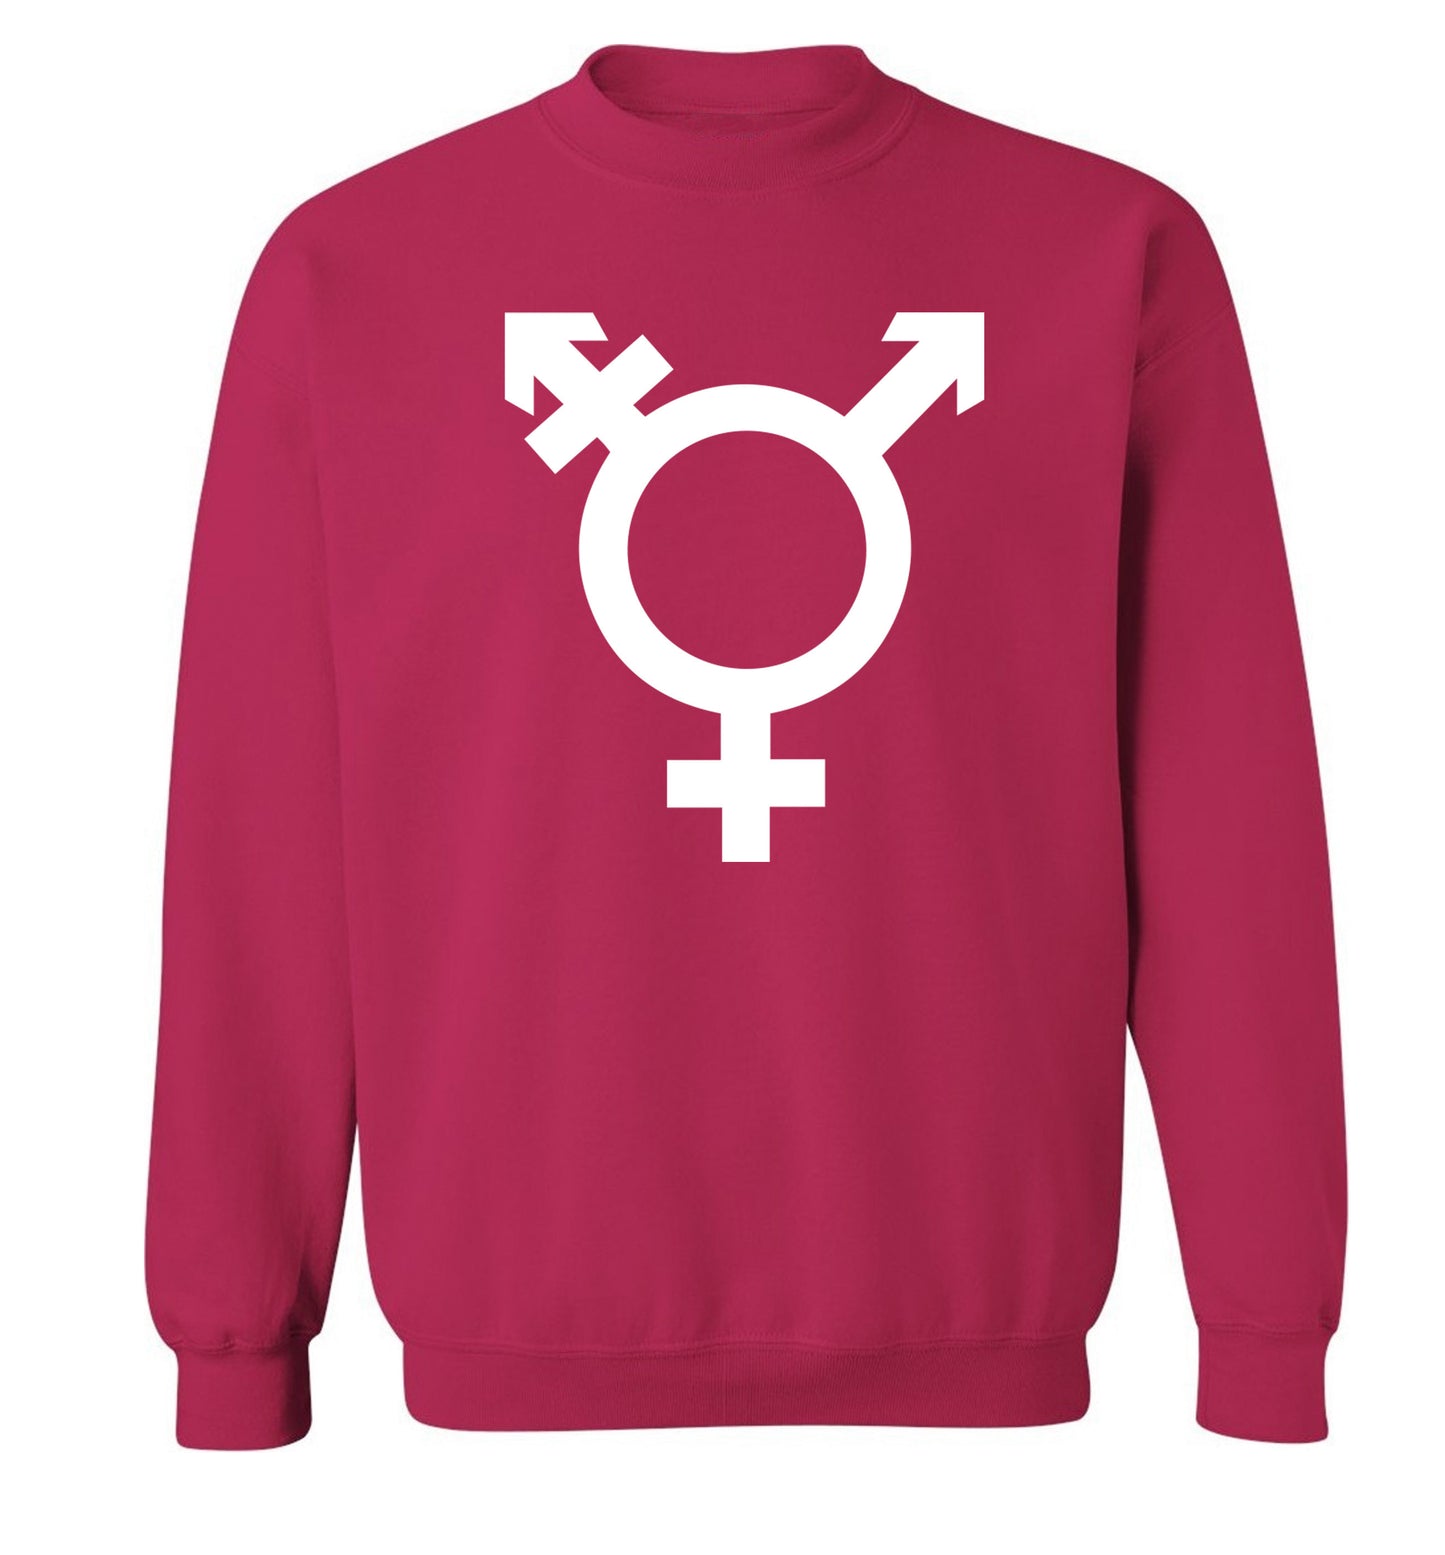 Gender neutral symbol large Adult's unisex pink Sweater 2XL